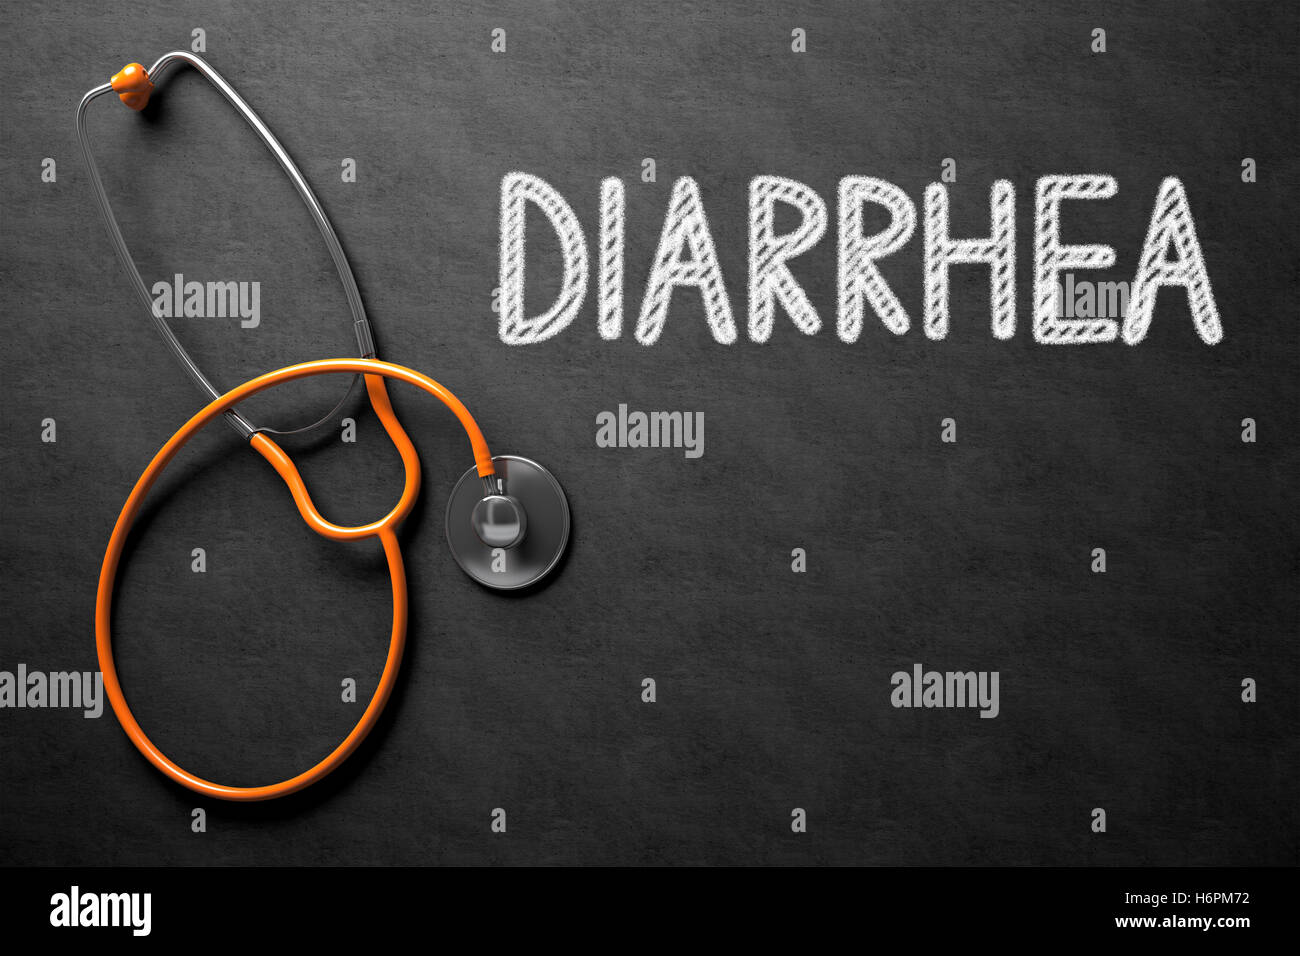 Diarrhea Concept on Chalkboard. 3D Illustration. Stock Photo